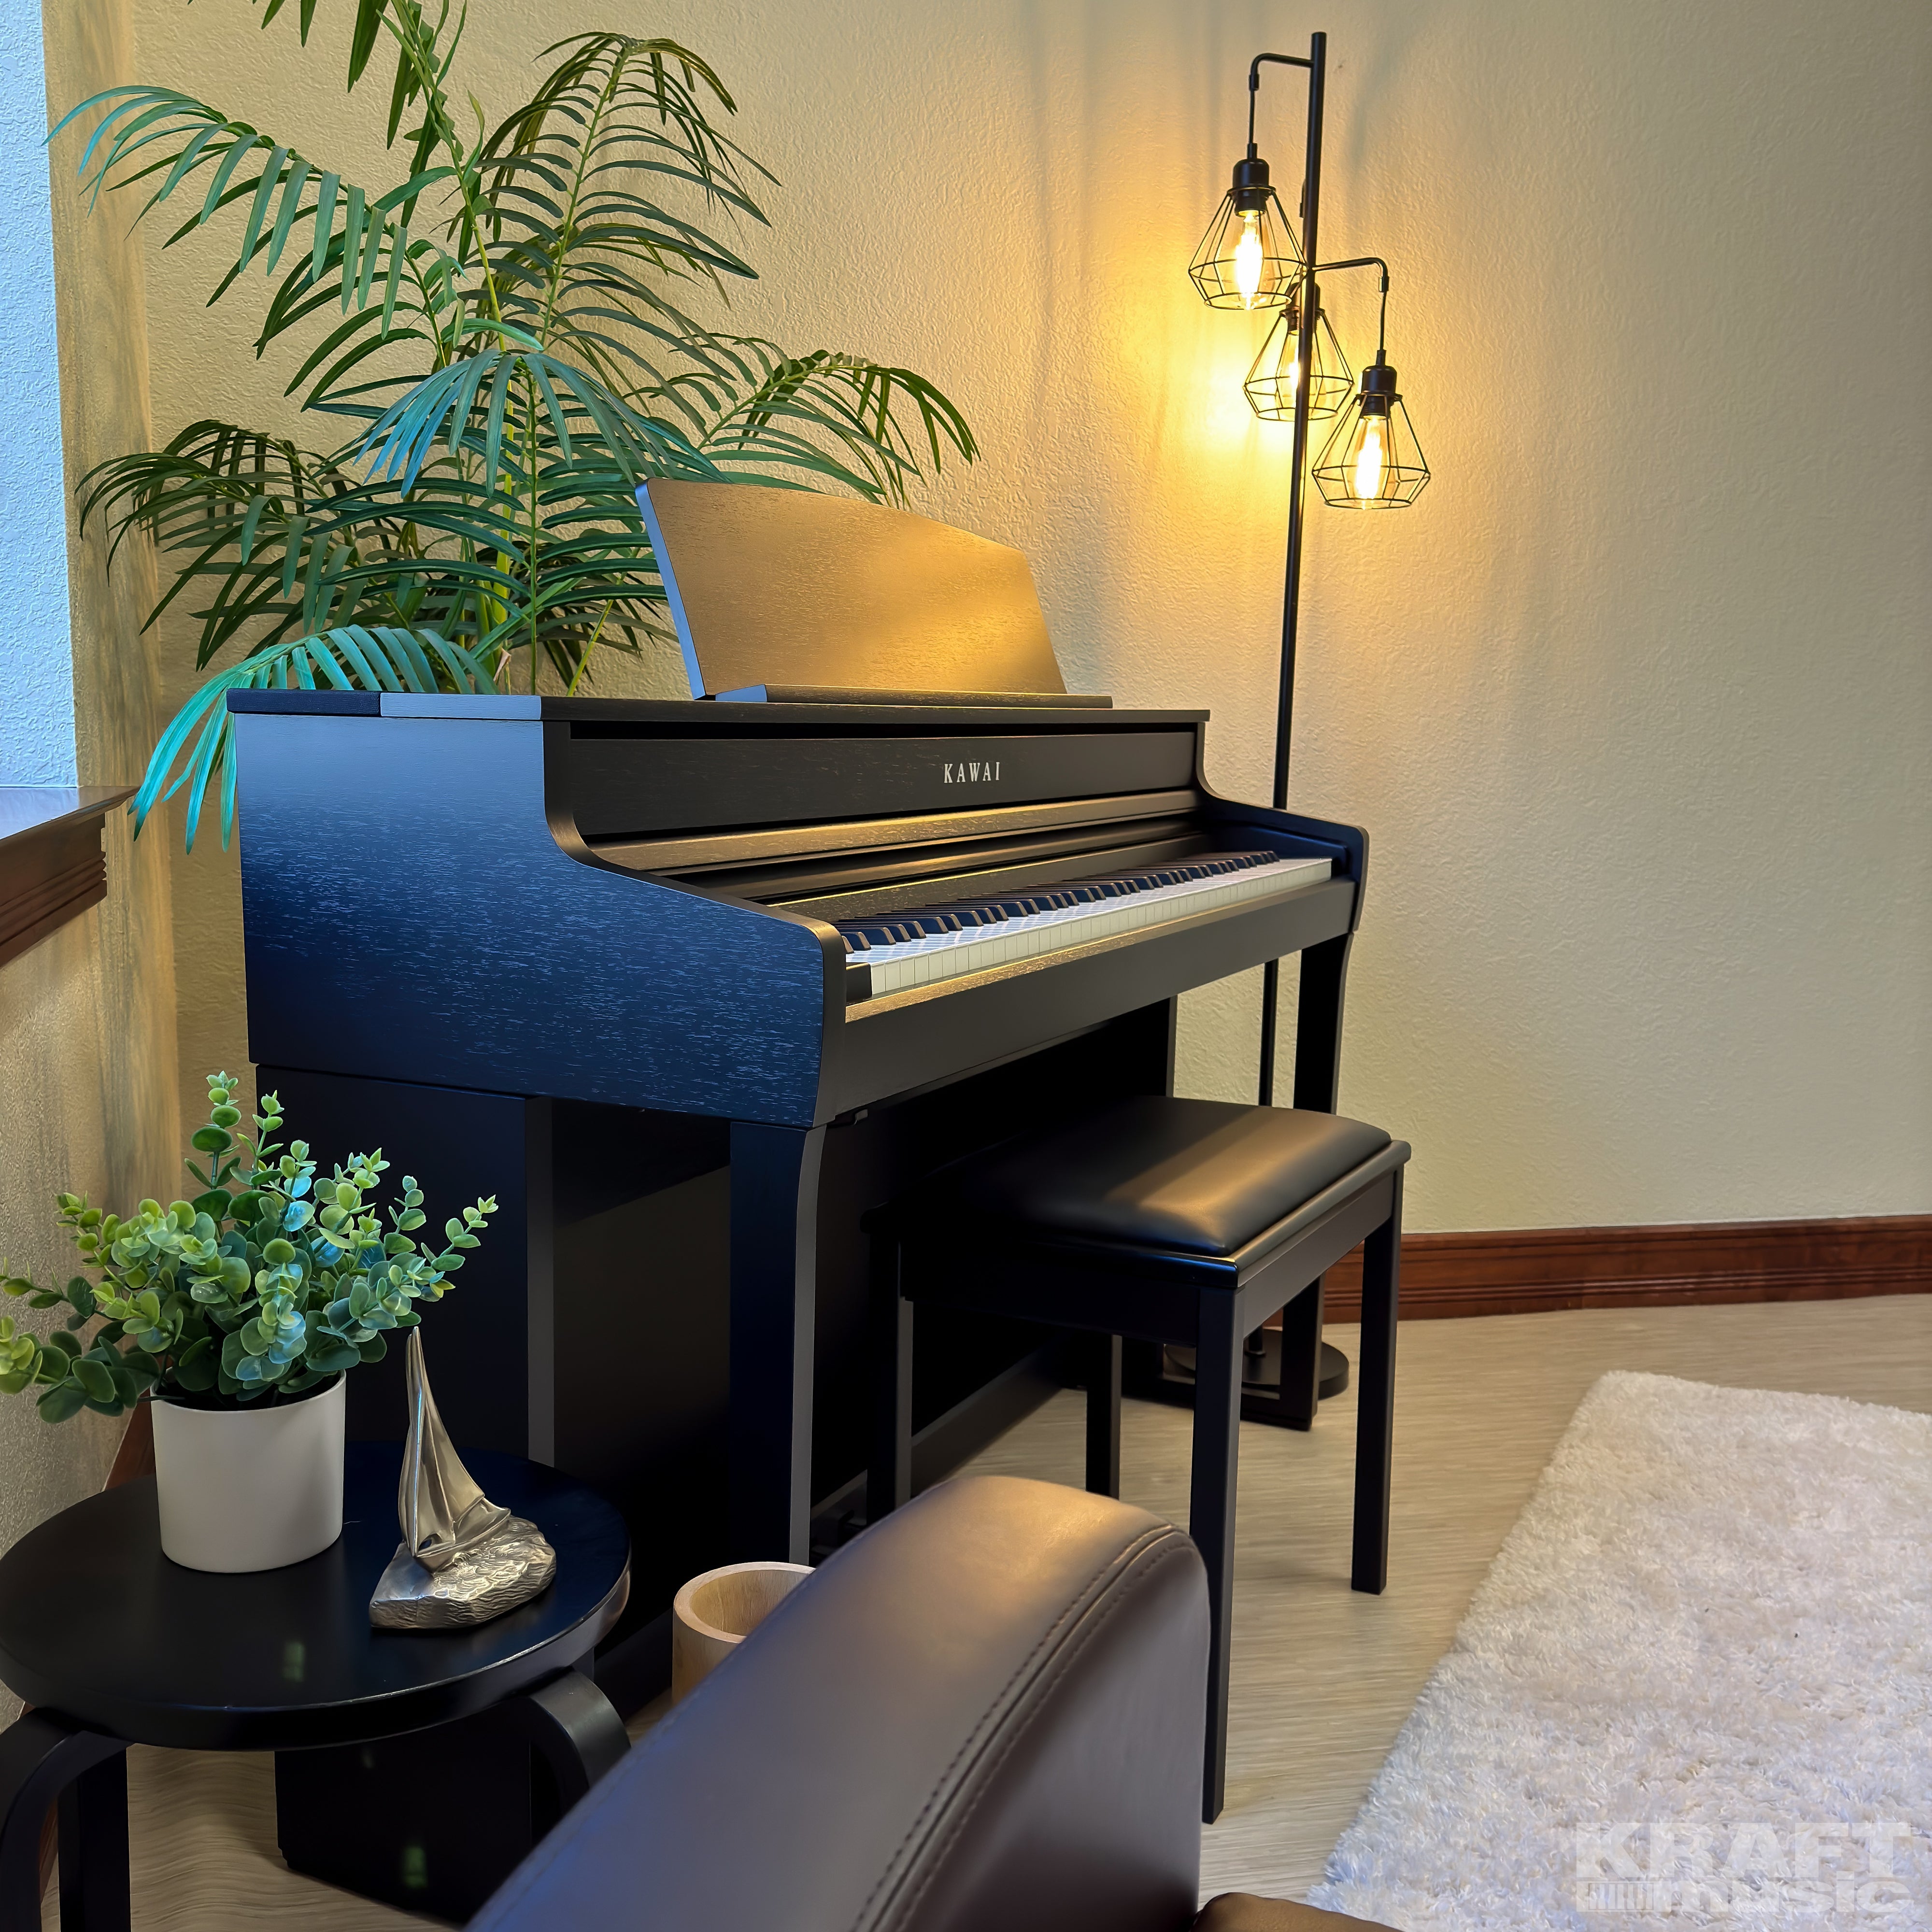 Kawai CA501 Concert Artist Digital Piano - Satin Black - in a stylish living room facing right